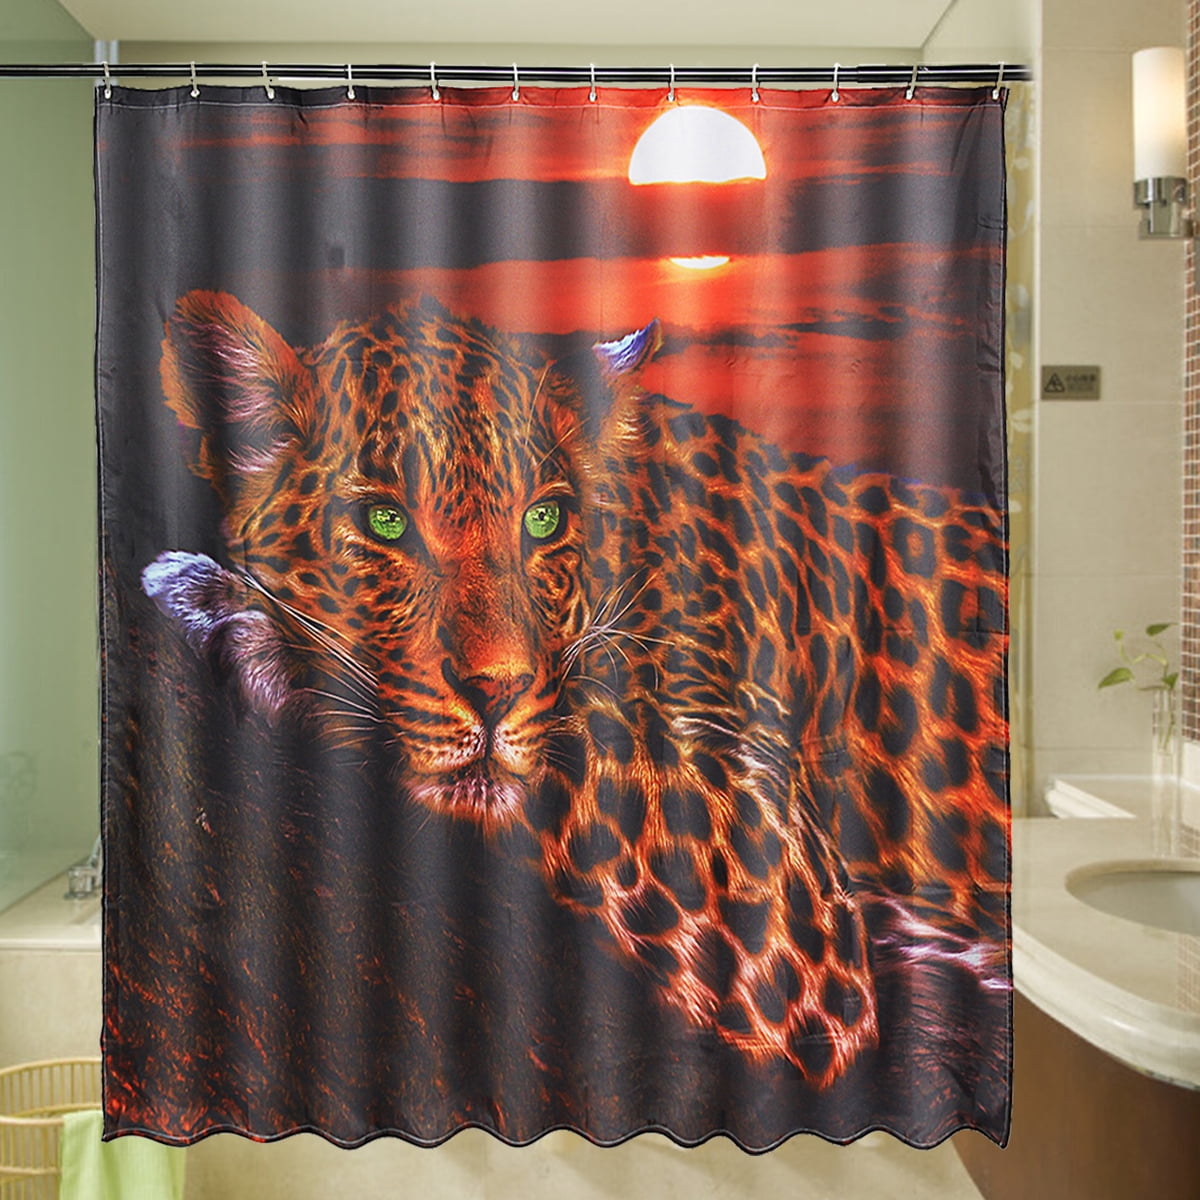 Patgoal 4PCS Shower Curtain Set,Lion/Tiger/Leopard Bathroom Curtain Shower Sets with Rugs for Men/Women Shower Stall Curtain for Bathroom Accessory Set Toilet Seat Set Sunset/Gold/Black